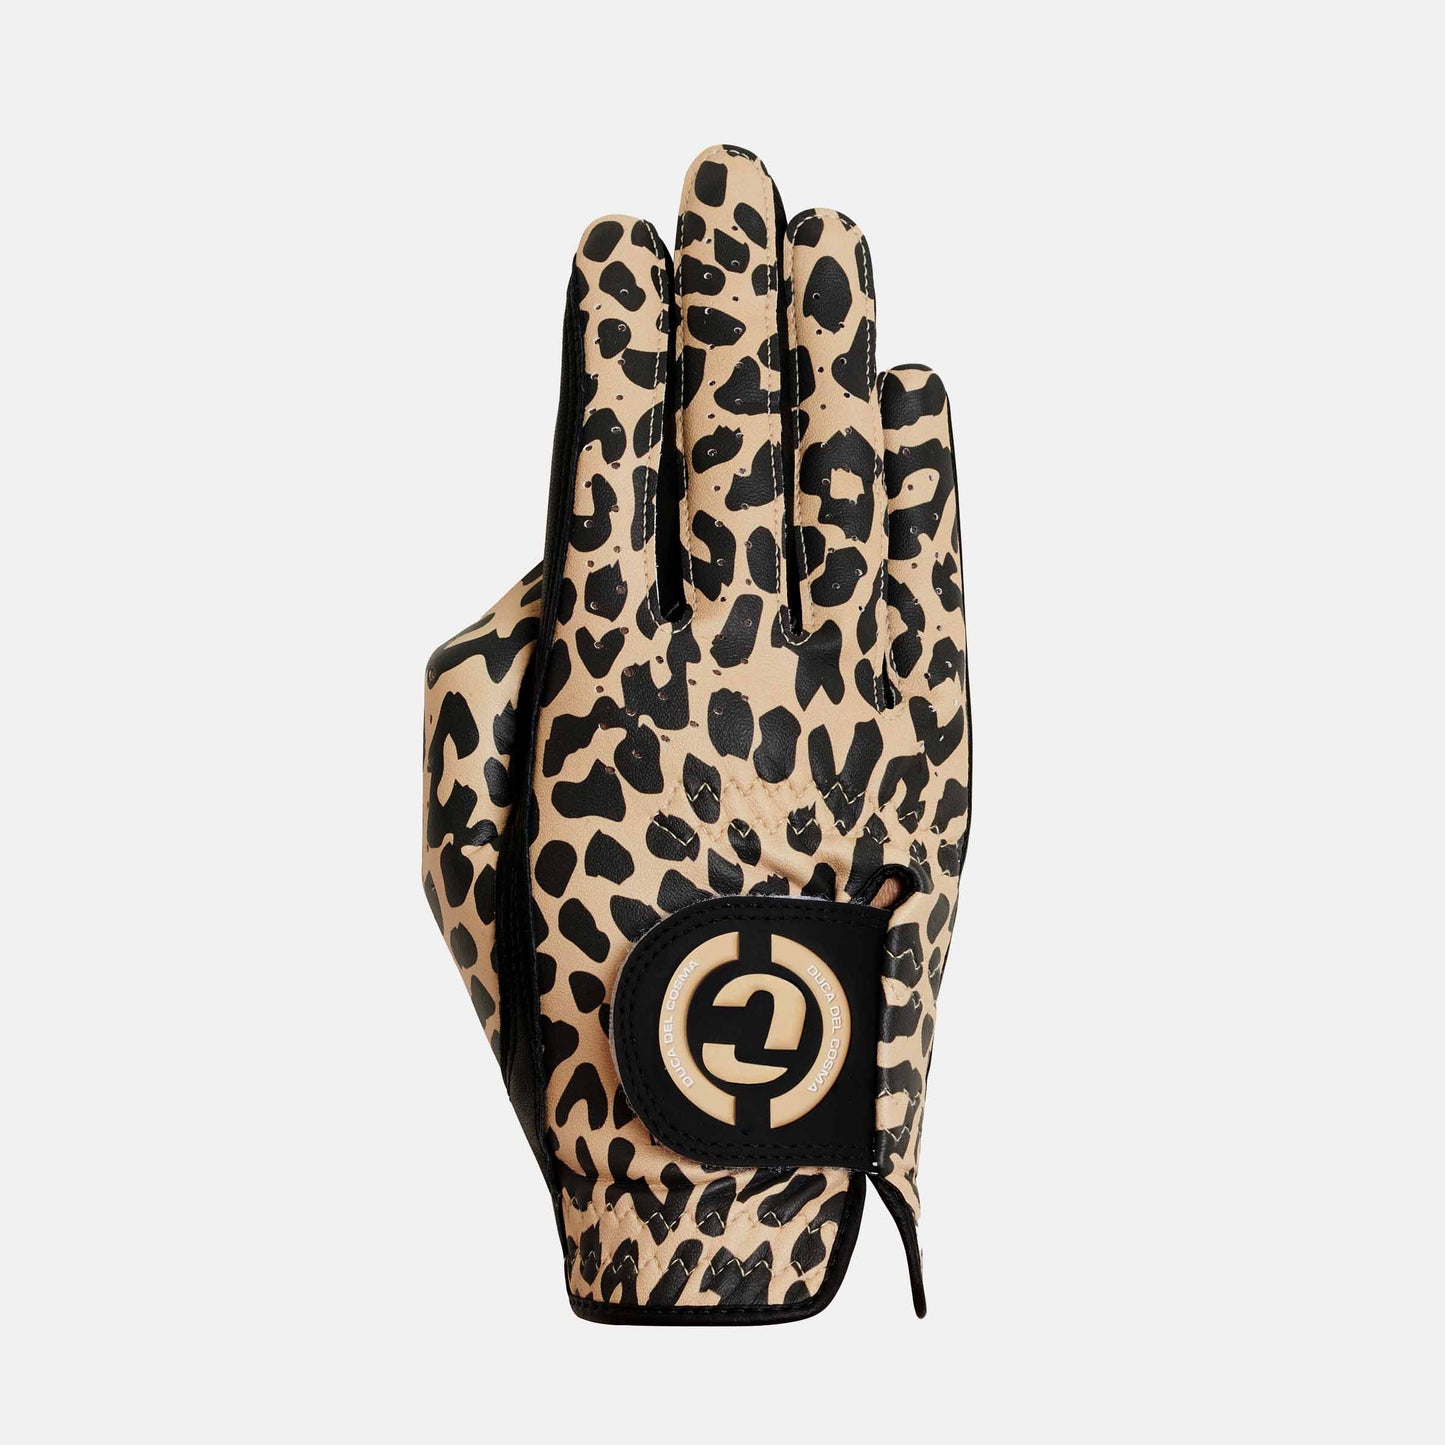 Designer Pro - Right - King Cheetah Black